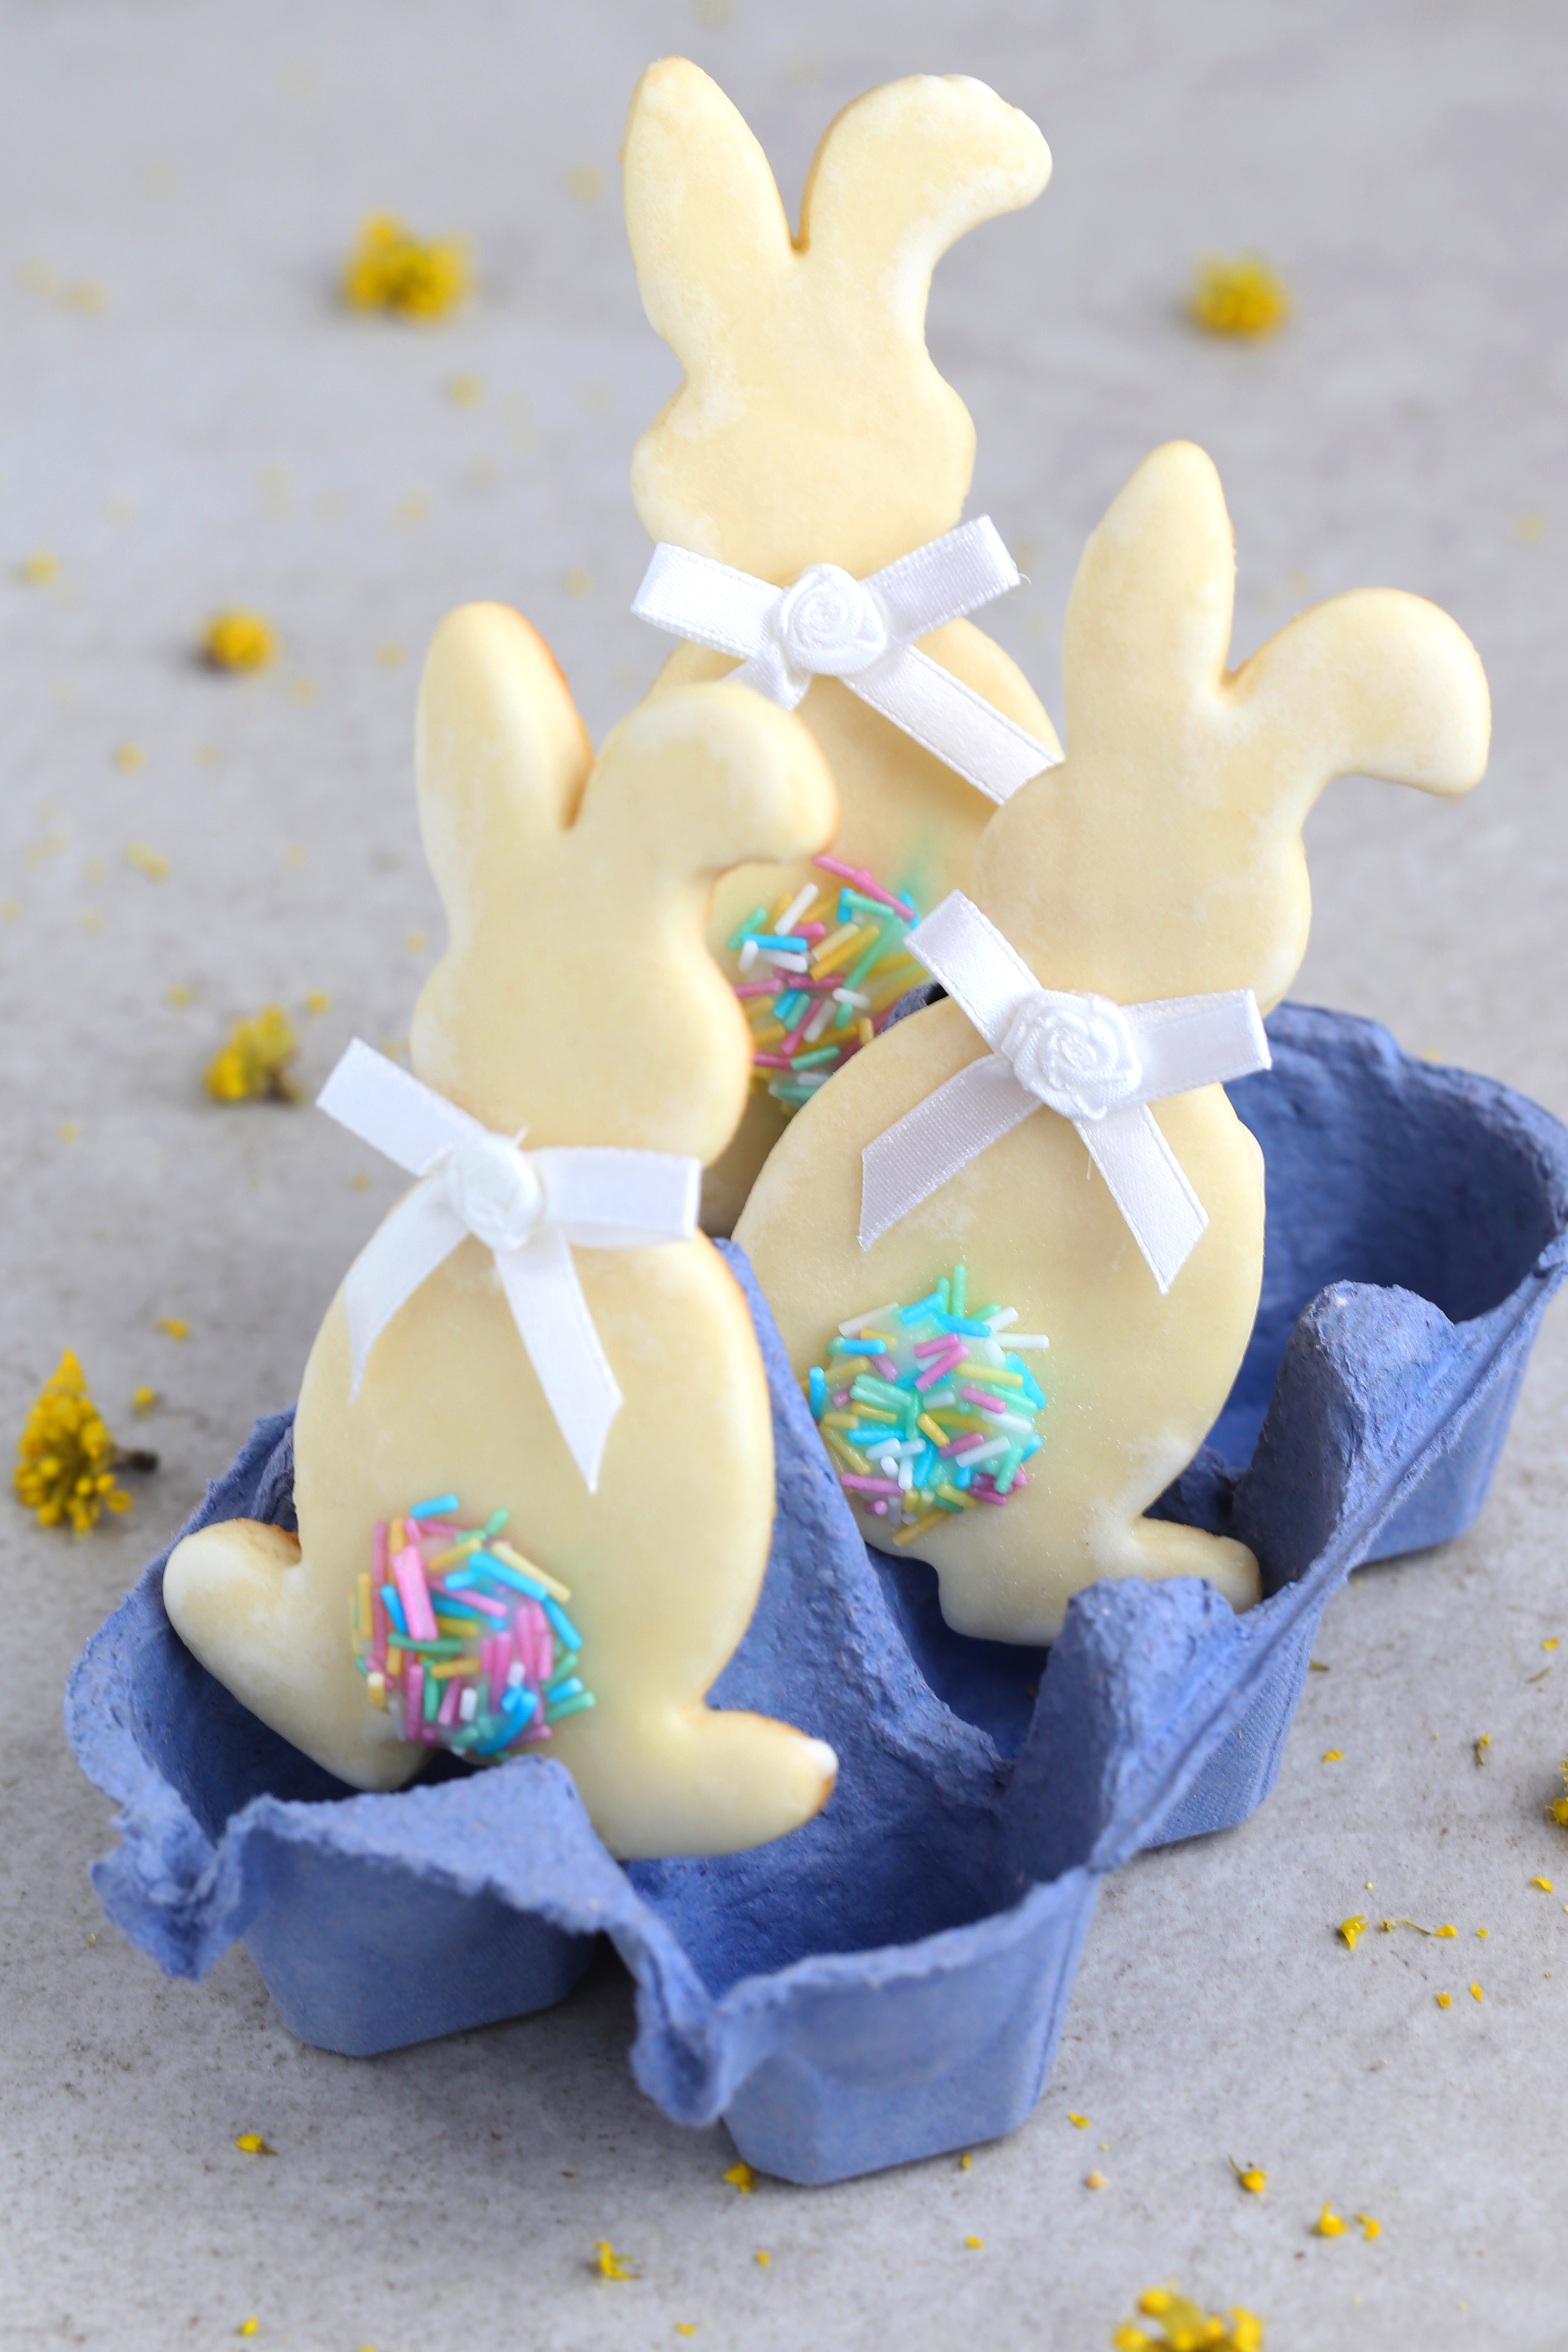 Petits biscuits "Lapins de Pâques" - delimoon.com